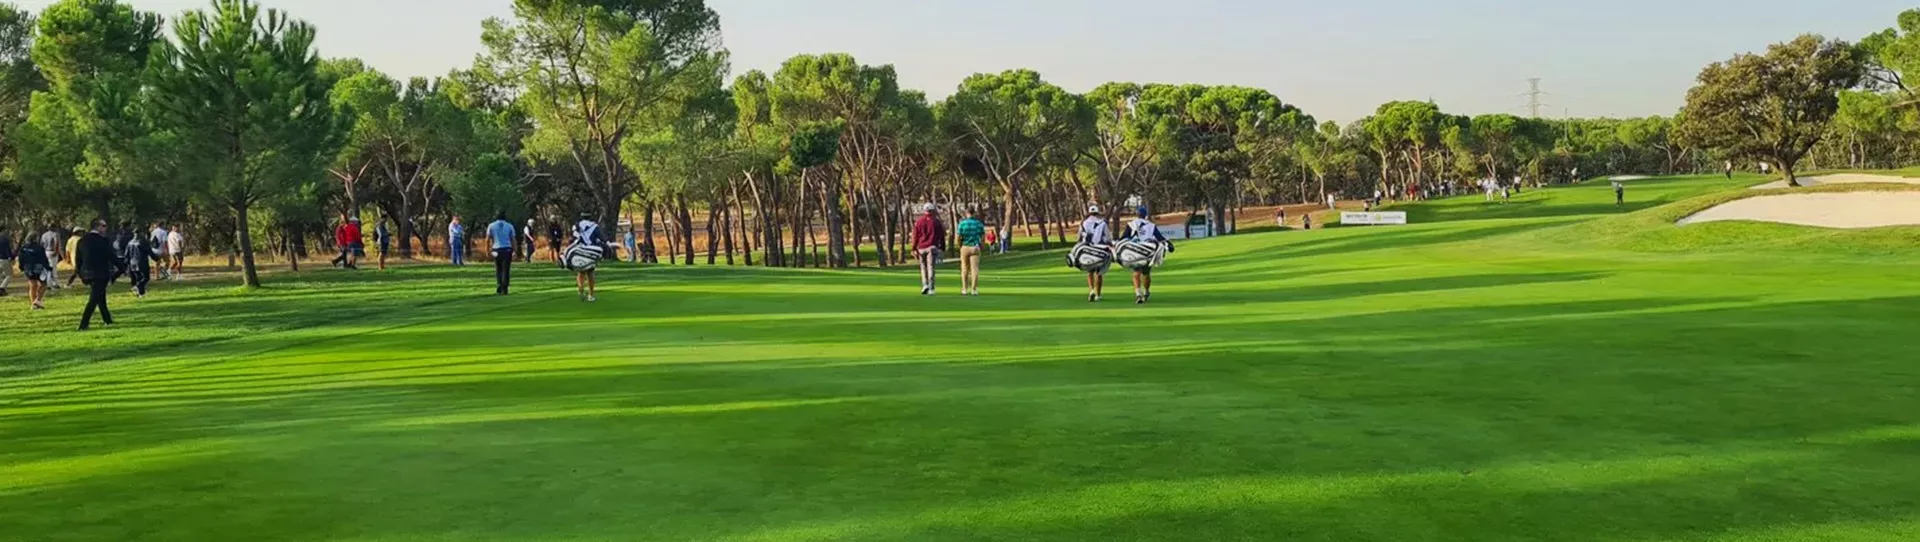 Spain golf courses - Villa de Madrid Golf Black Course - Photo 3